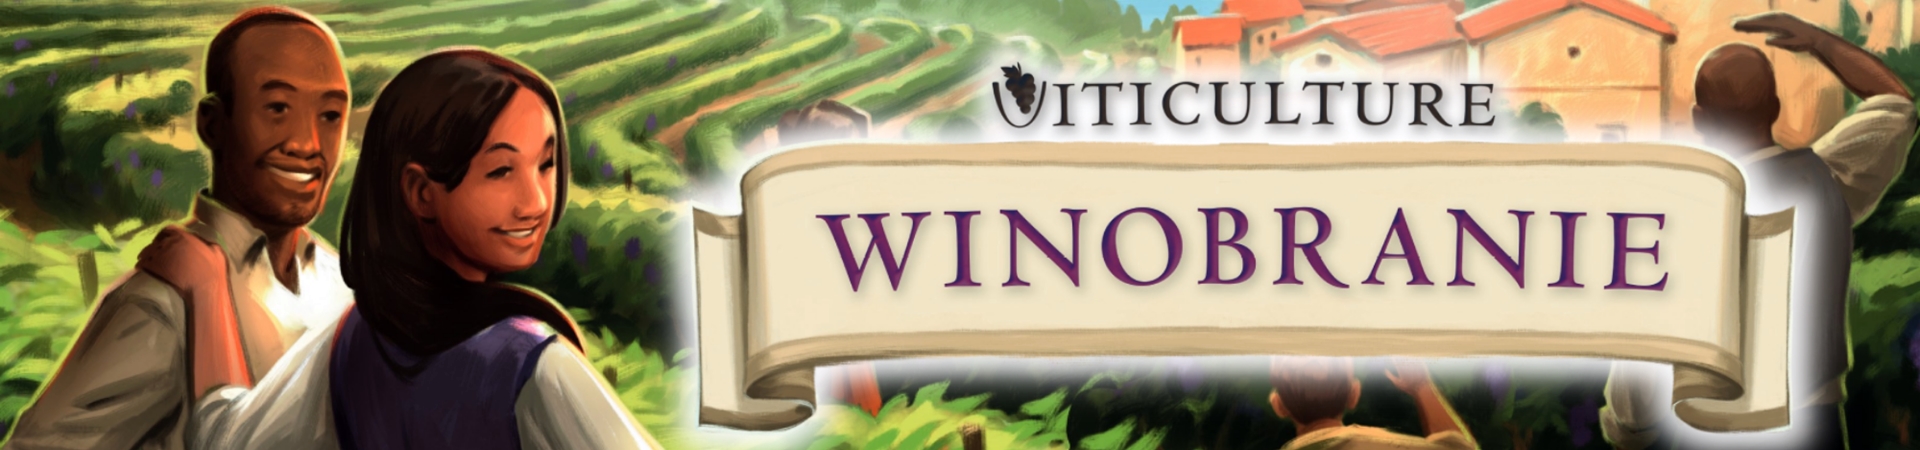 Viticulture Winobranie dodatek